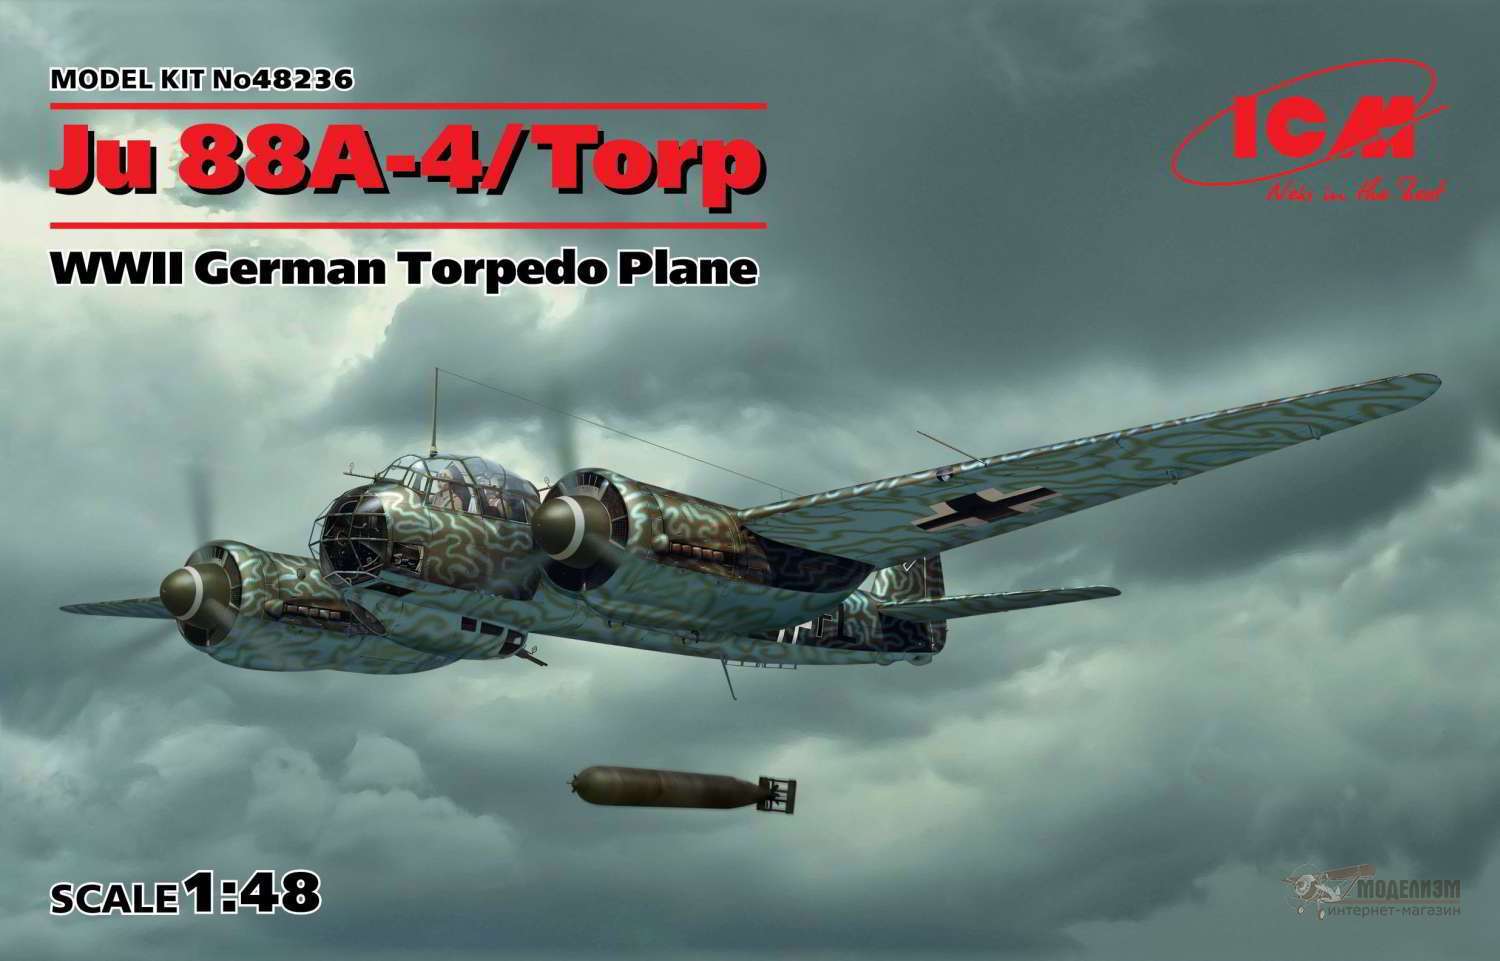 ICM48236, Ju 88A-4/Torp. Картинка №1